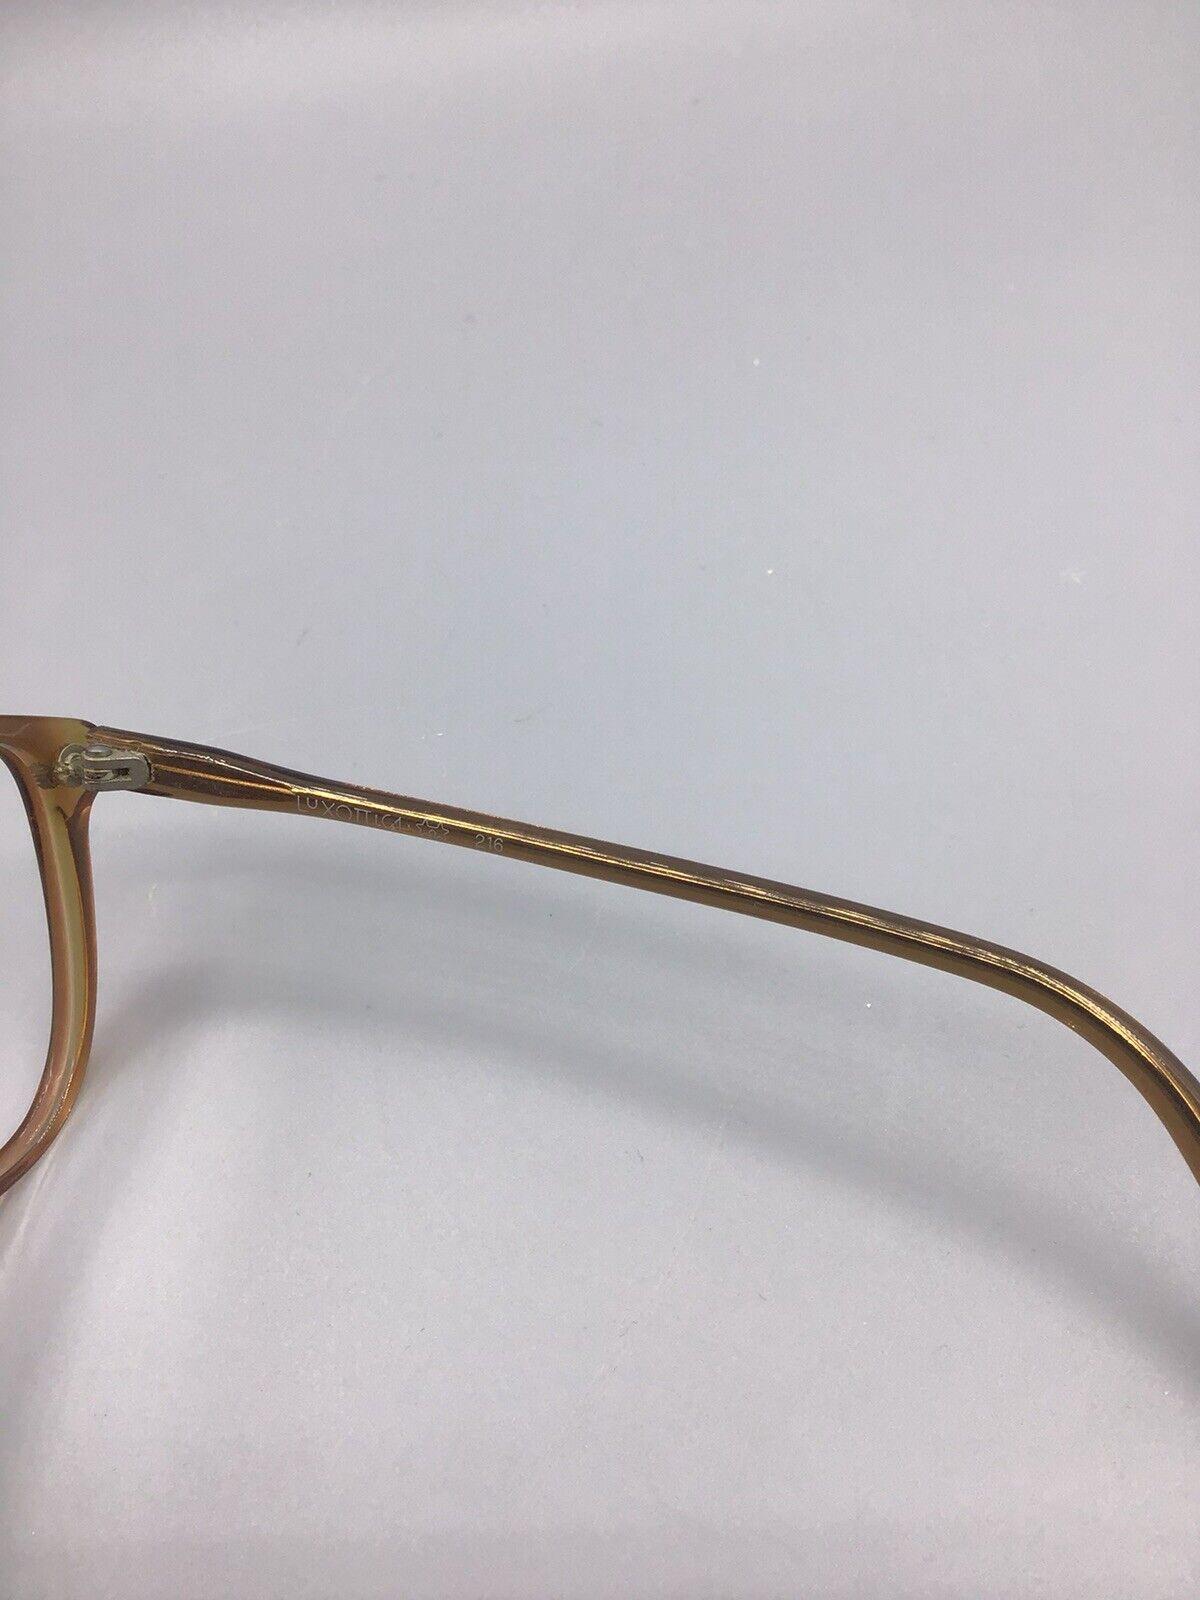 Luxottica occhiale vintage eyewear frame 049 Italy 216 brillen lunettes